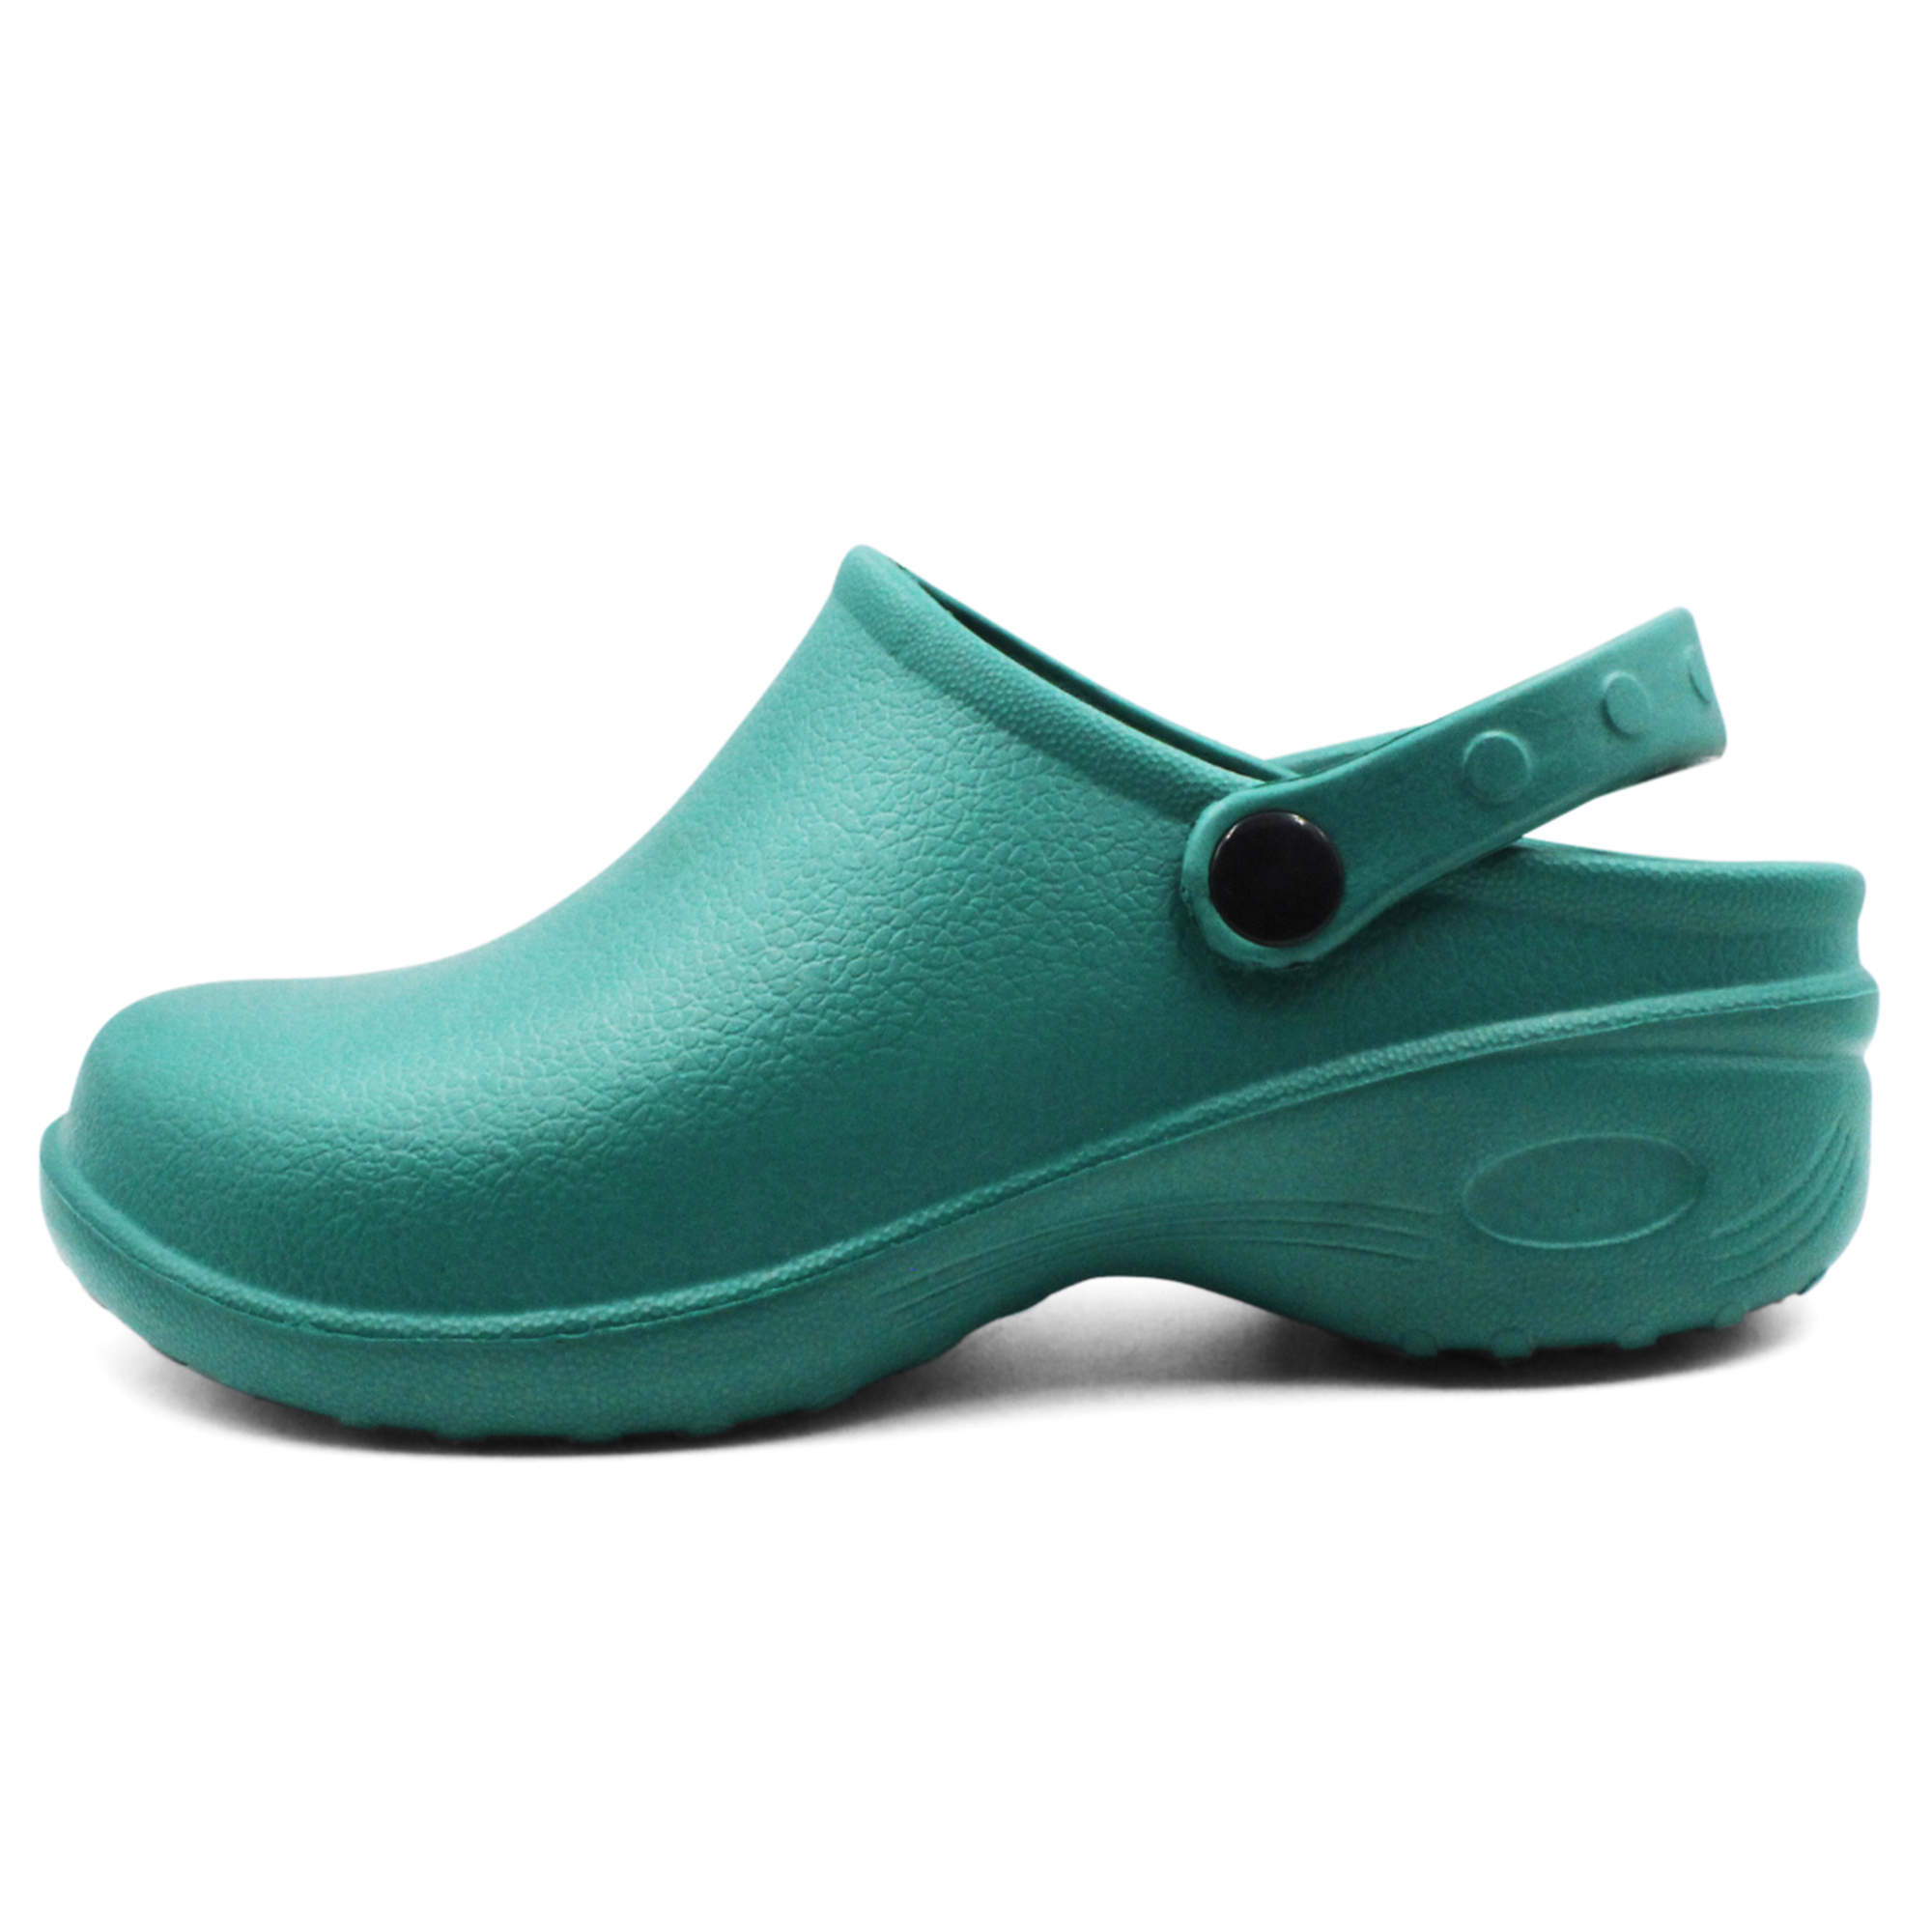 Womens Clogs Garden Sandals Nurse Hospital Shoes | eBay